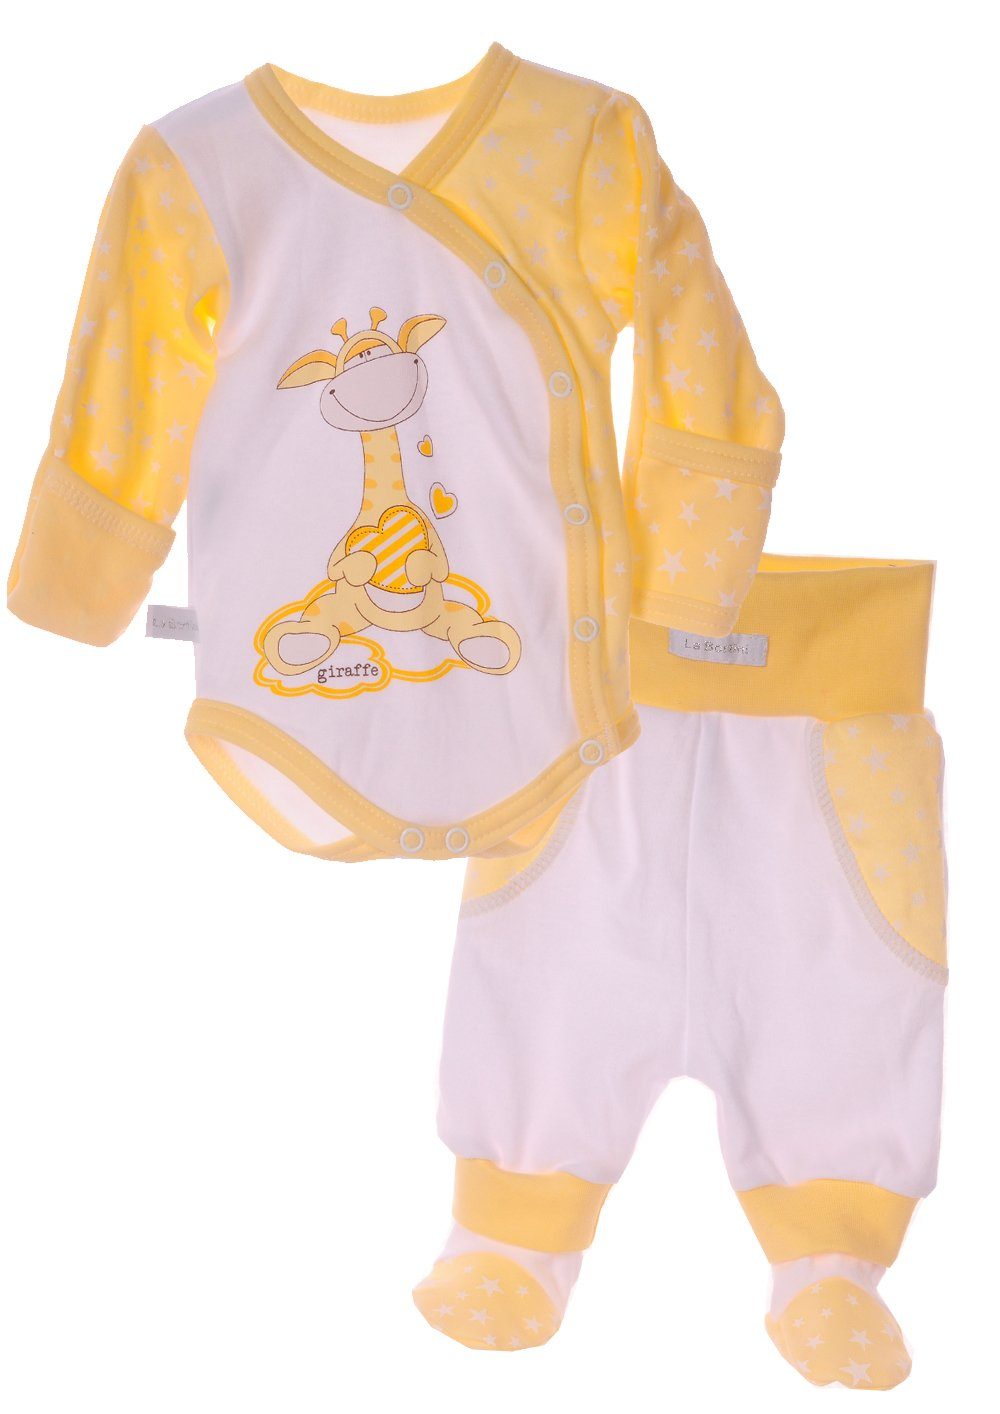 La Bortini Body & Hose Wickelbody Hose Baby Anzug 2tlg Set Body 44 50 56 62 68 74 80 Body mit Giraffen Druck und Sternen Muster